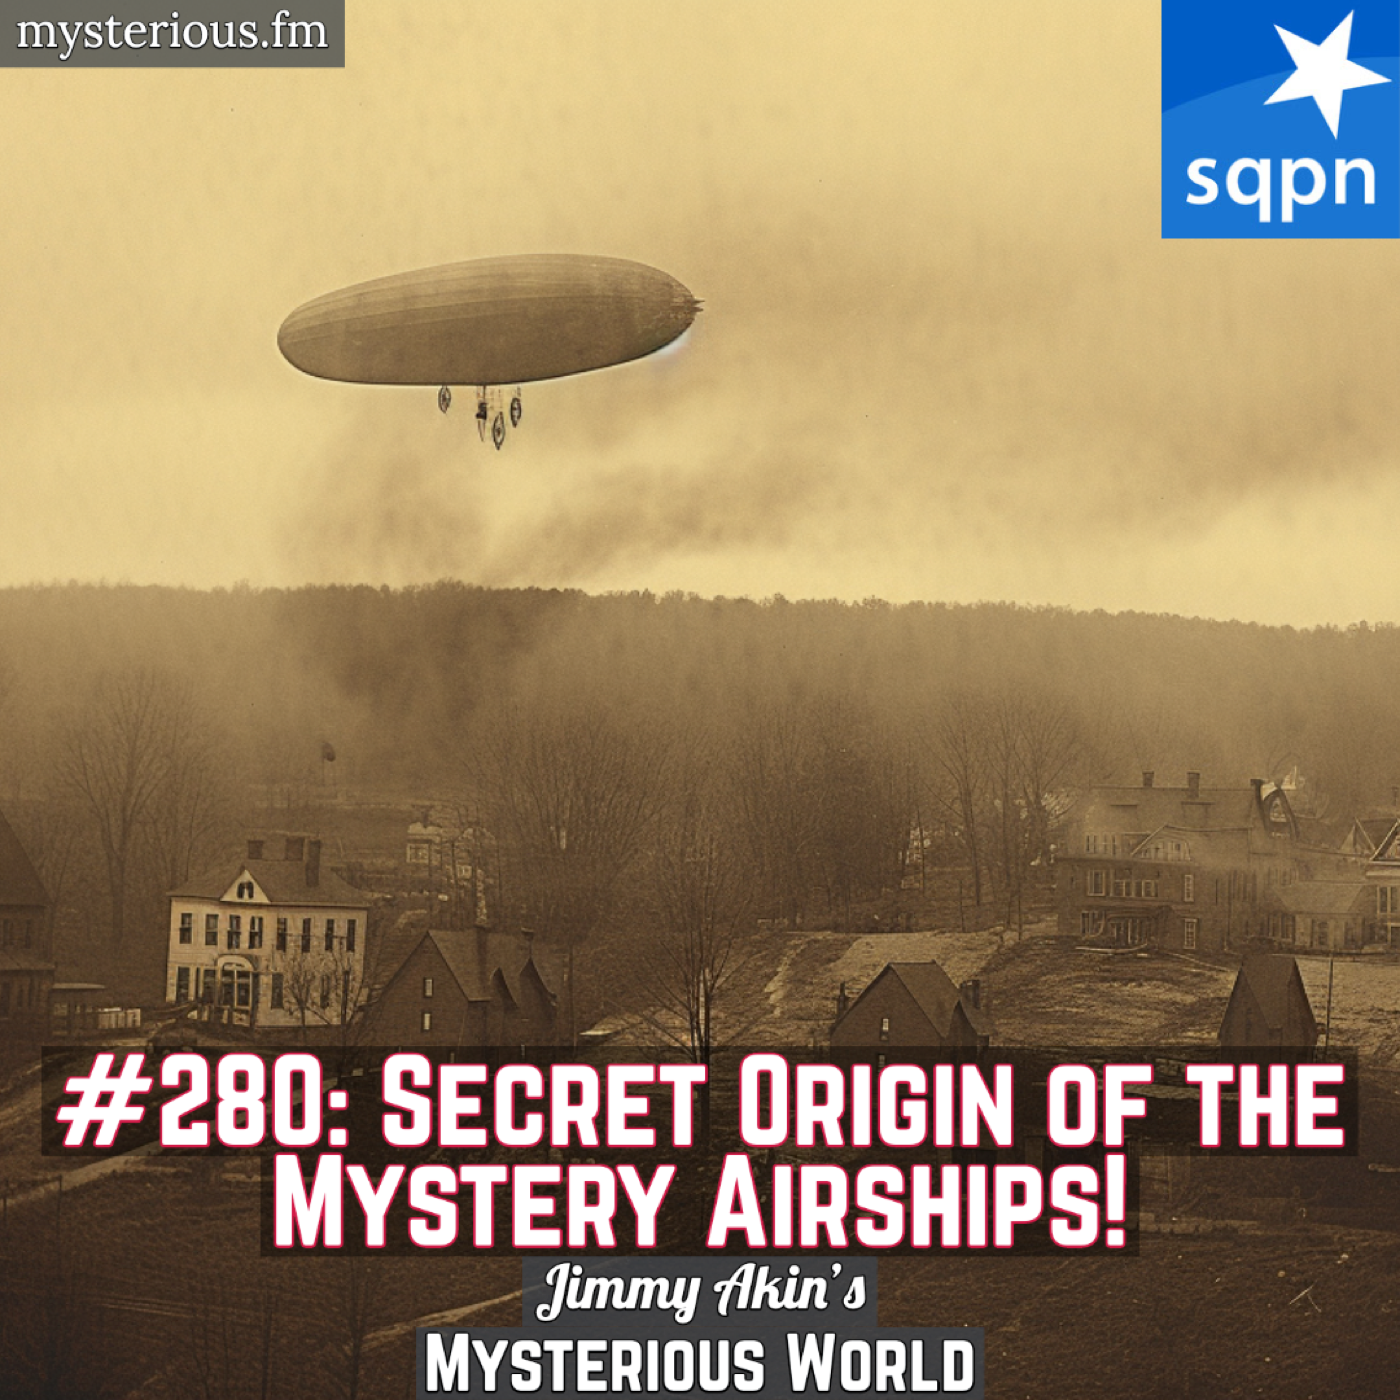 Secret Origin of the Mystery Airships! (Phantom Airships, Ghost Airships, UFOs, 1896, 1897)